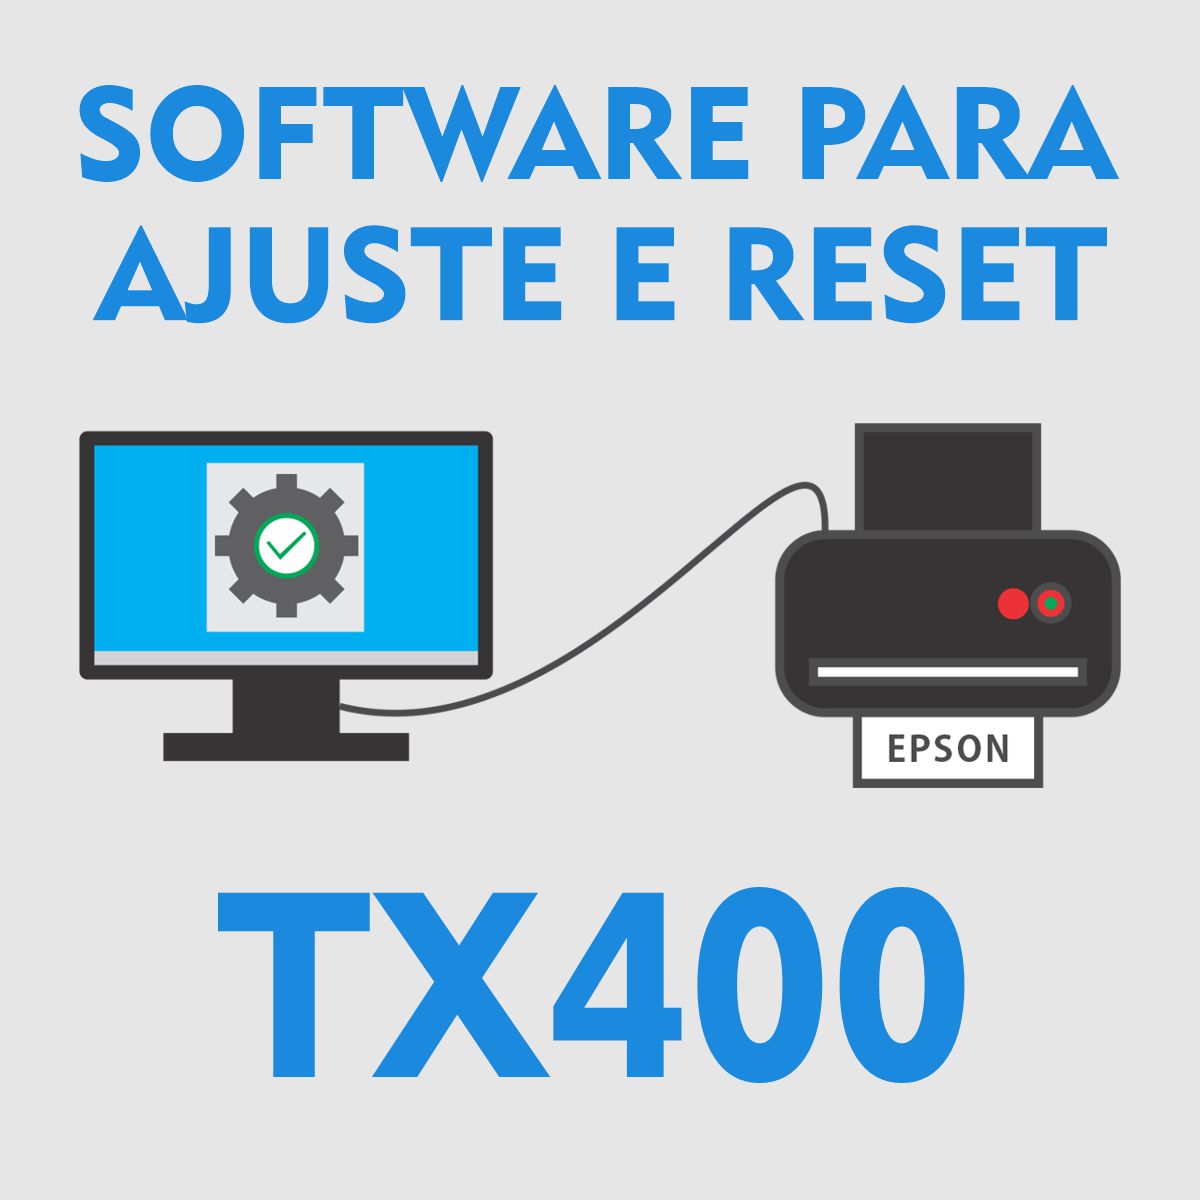 Epson TX400 | Software para Ajustes e Reset das Almofadas